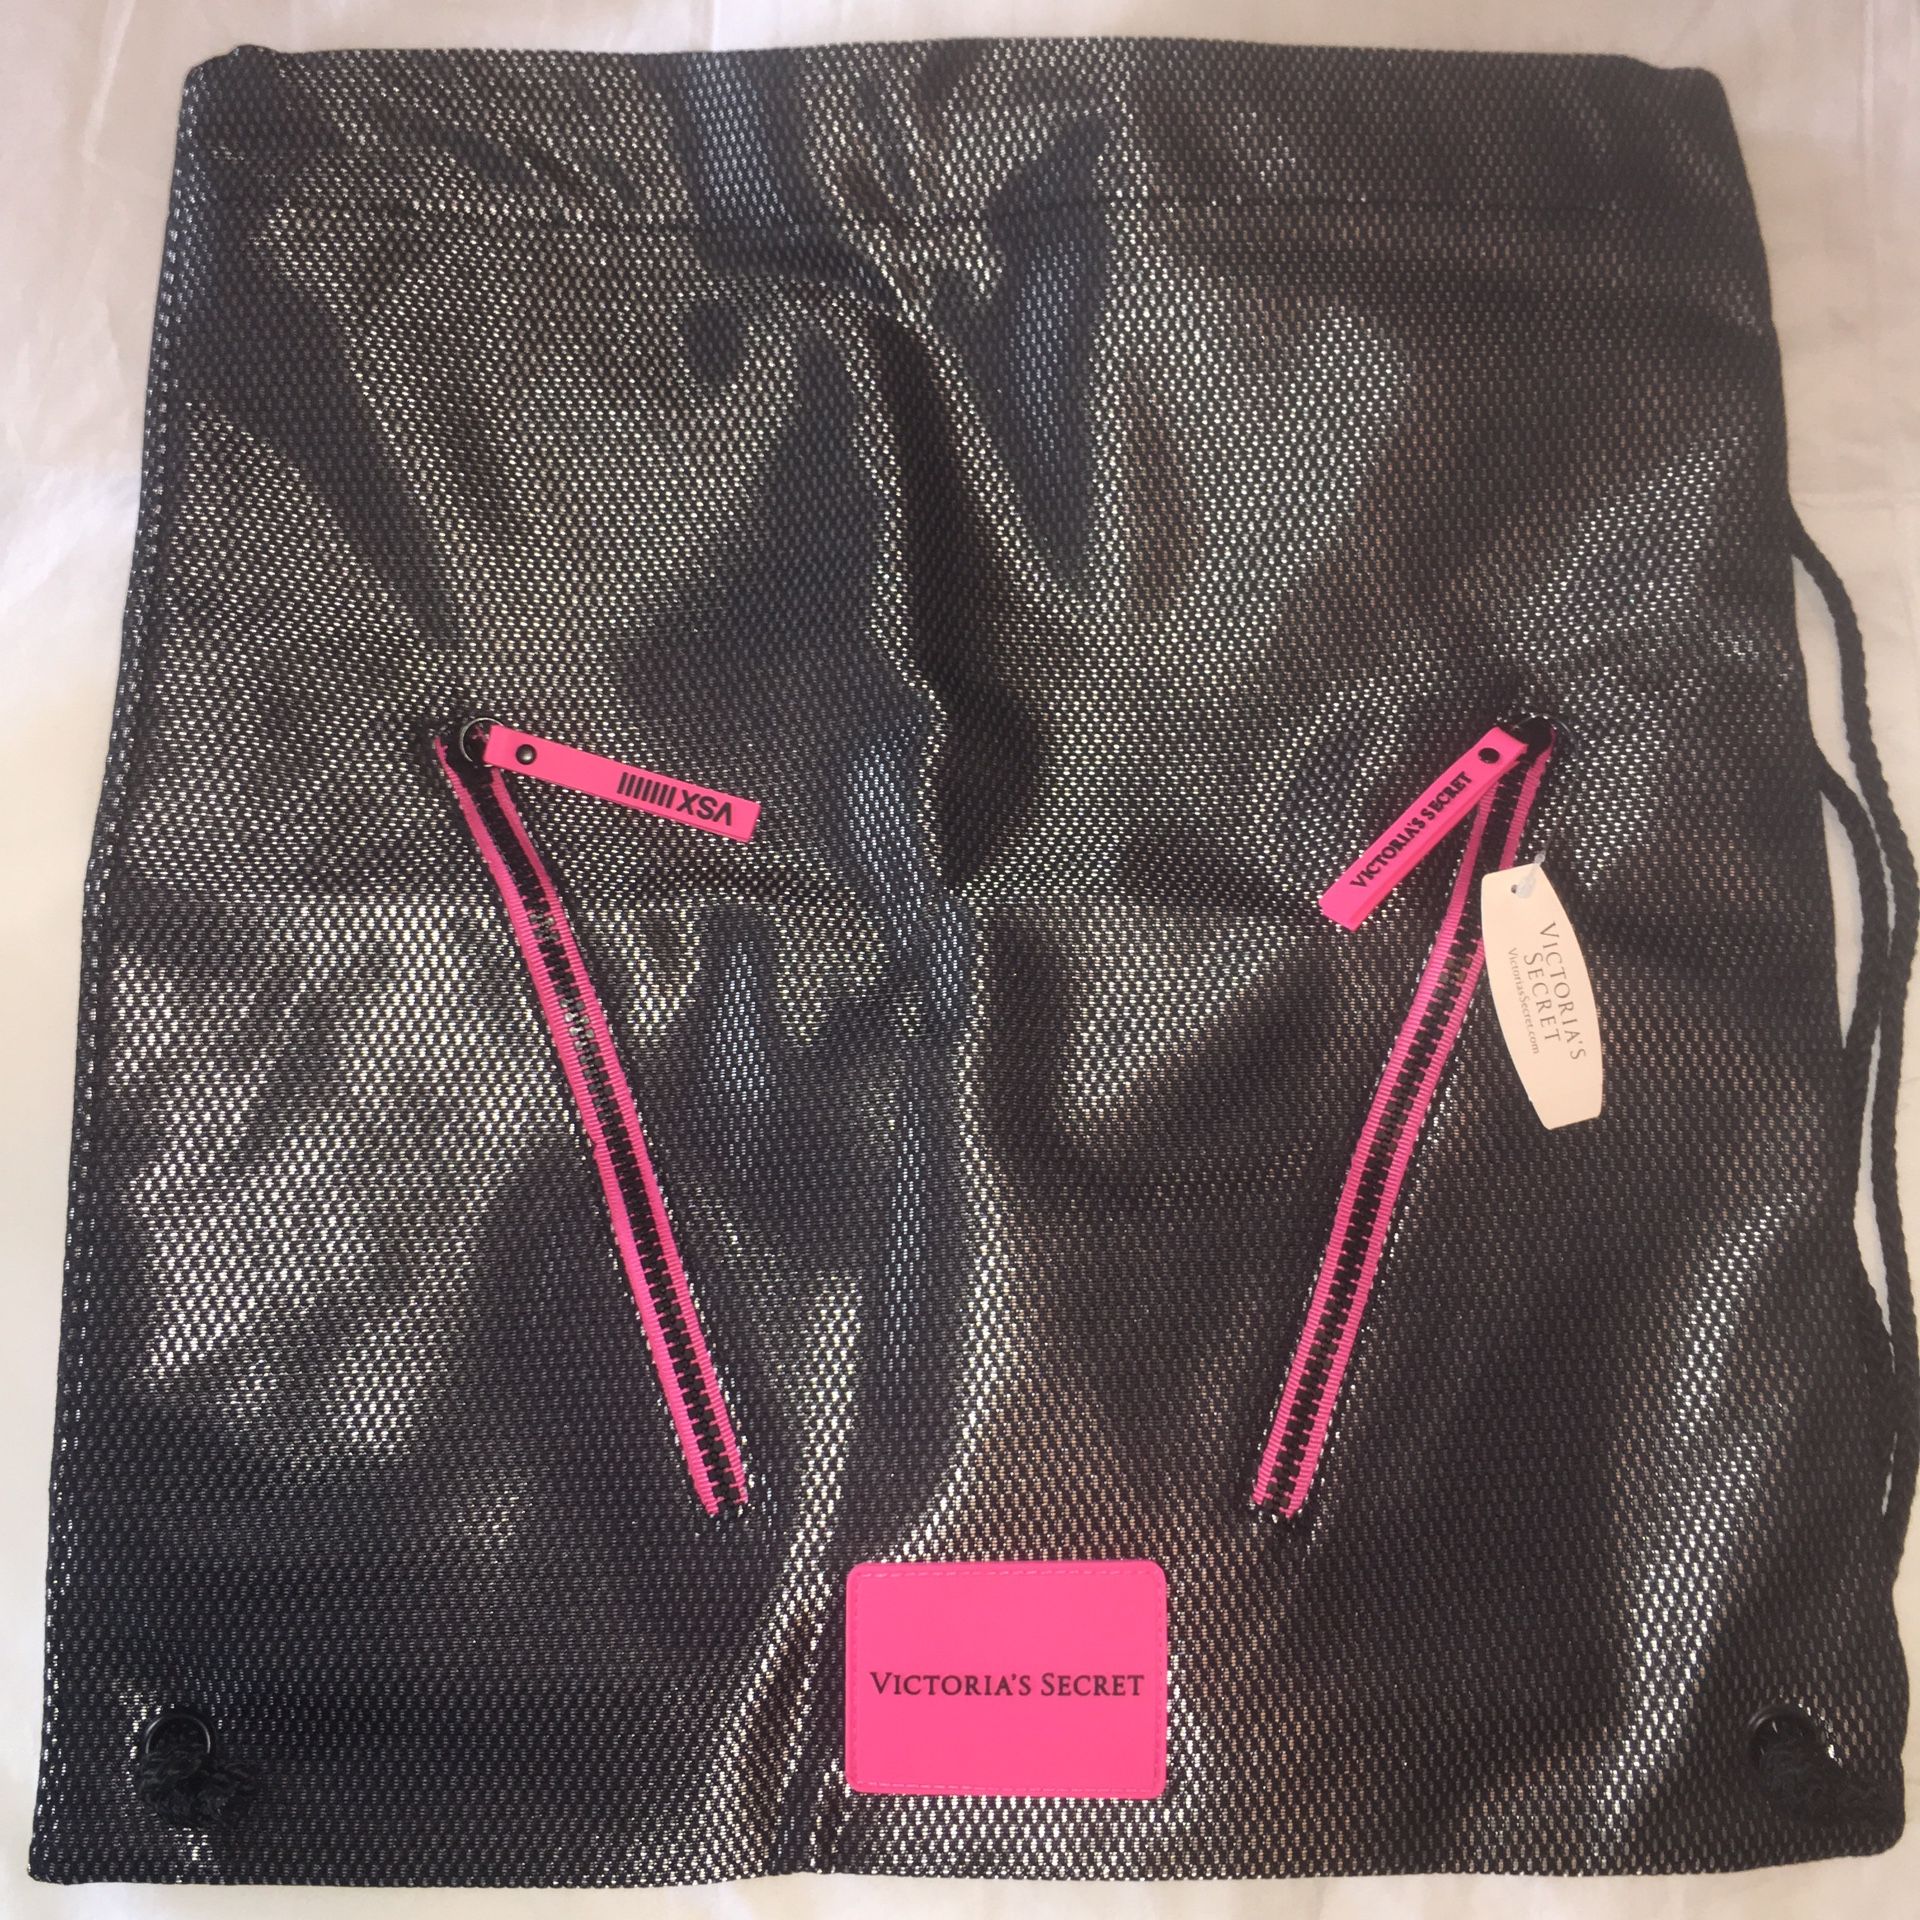 Victoria’s Secret Tote / Shoulder Bag. NEW/UNUSED. Black & Pink. $85 Retail. 16” x 17”. Pick up in Dublin.